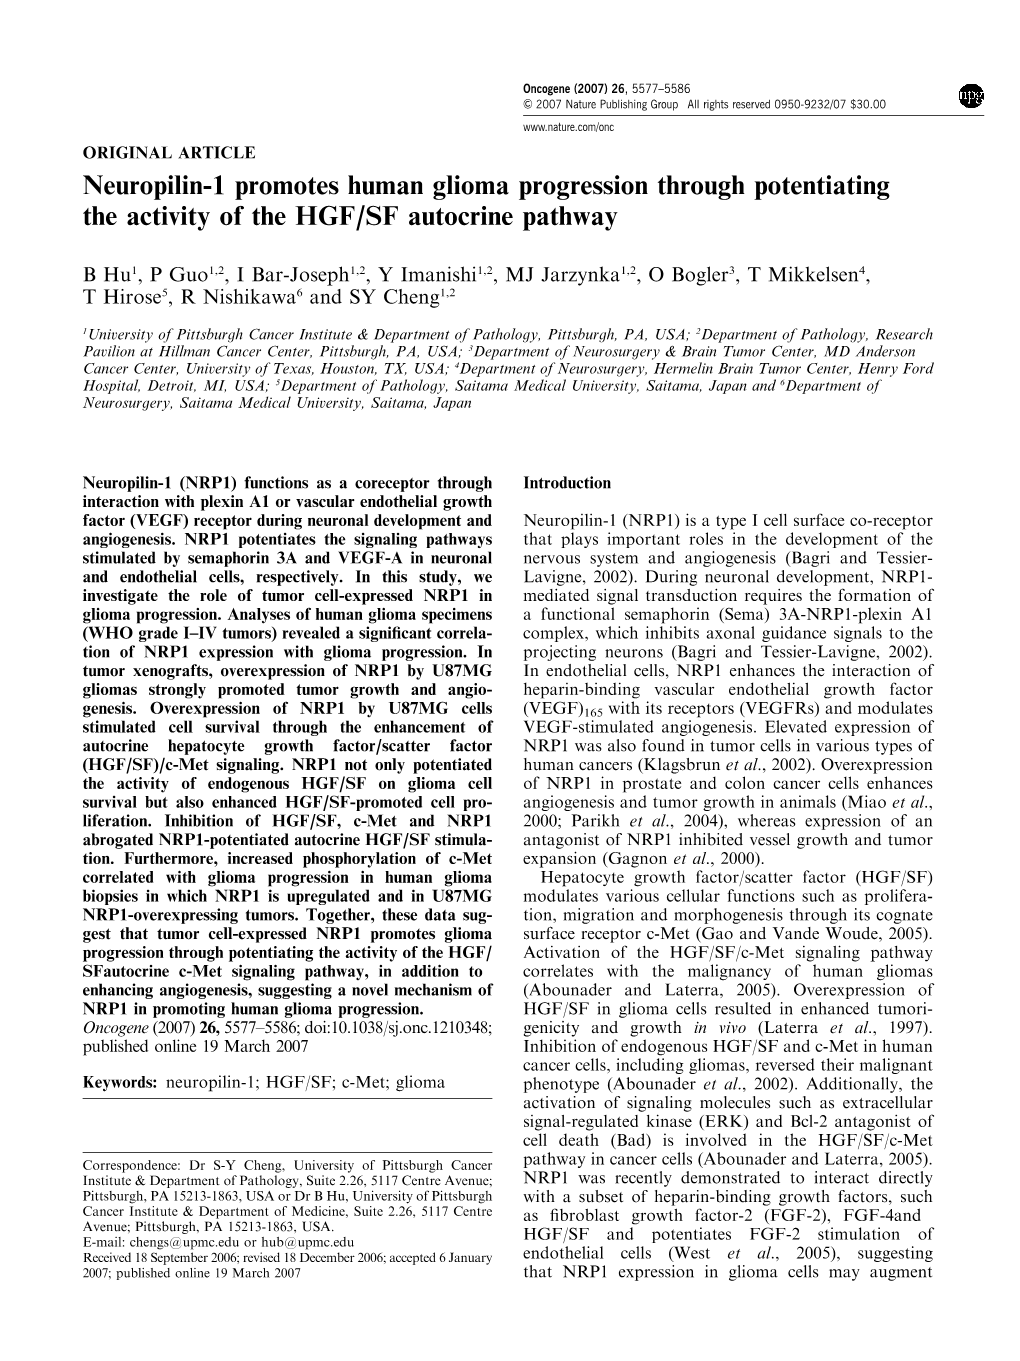 Neuropilin-1 Promotes Human Glioma Progression Through Potentiating the Activity of the HGF/SF Autocrine Pathway